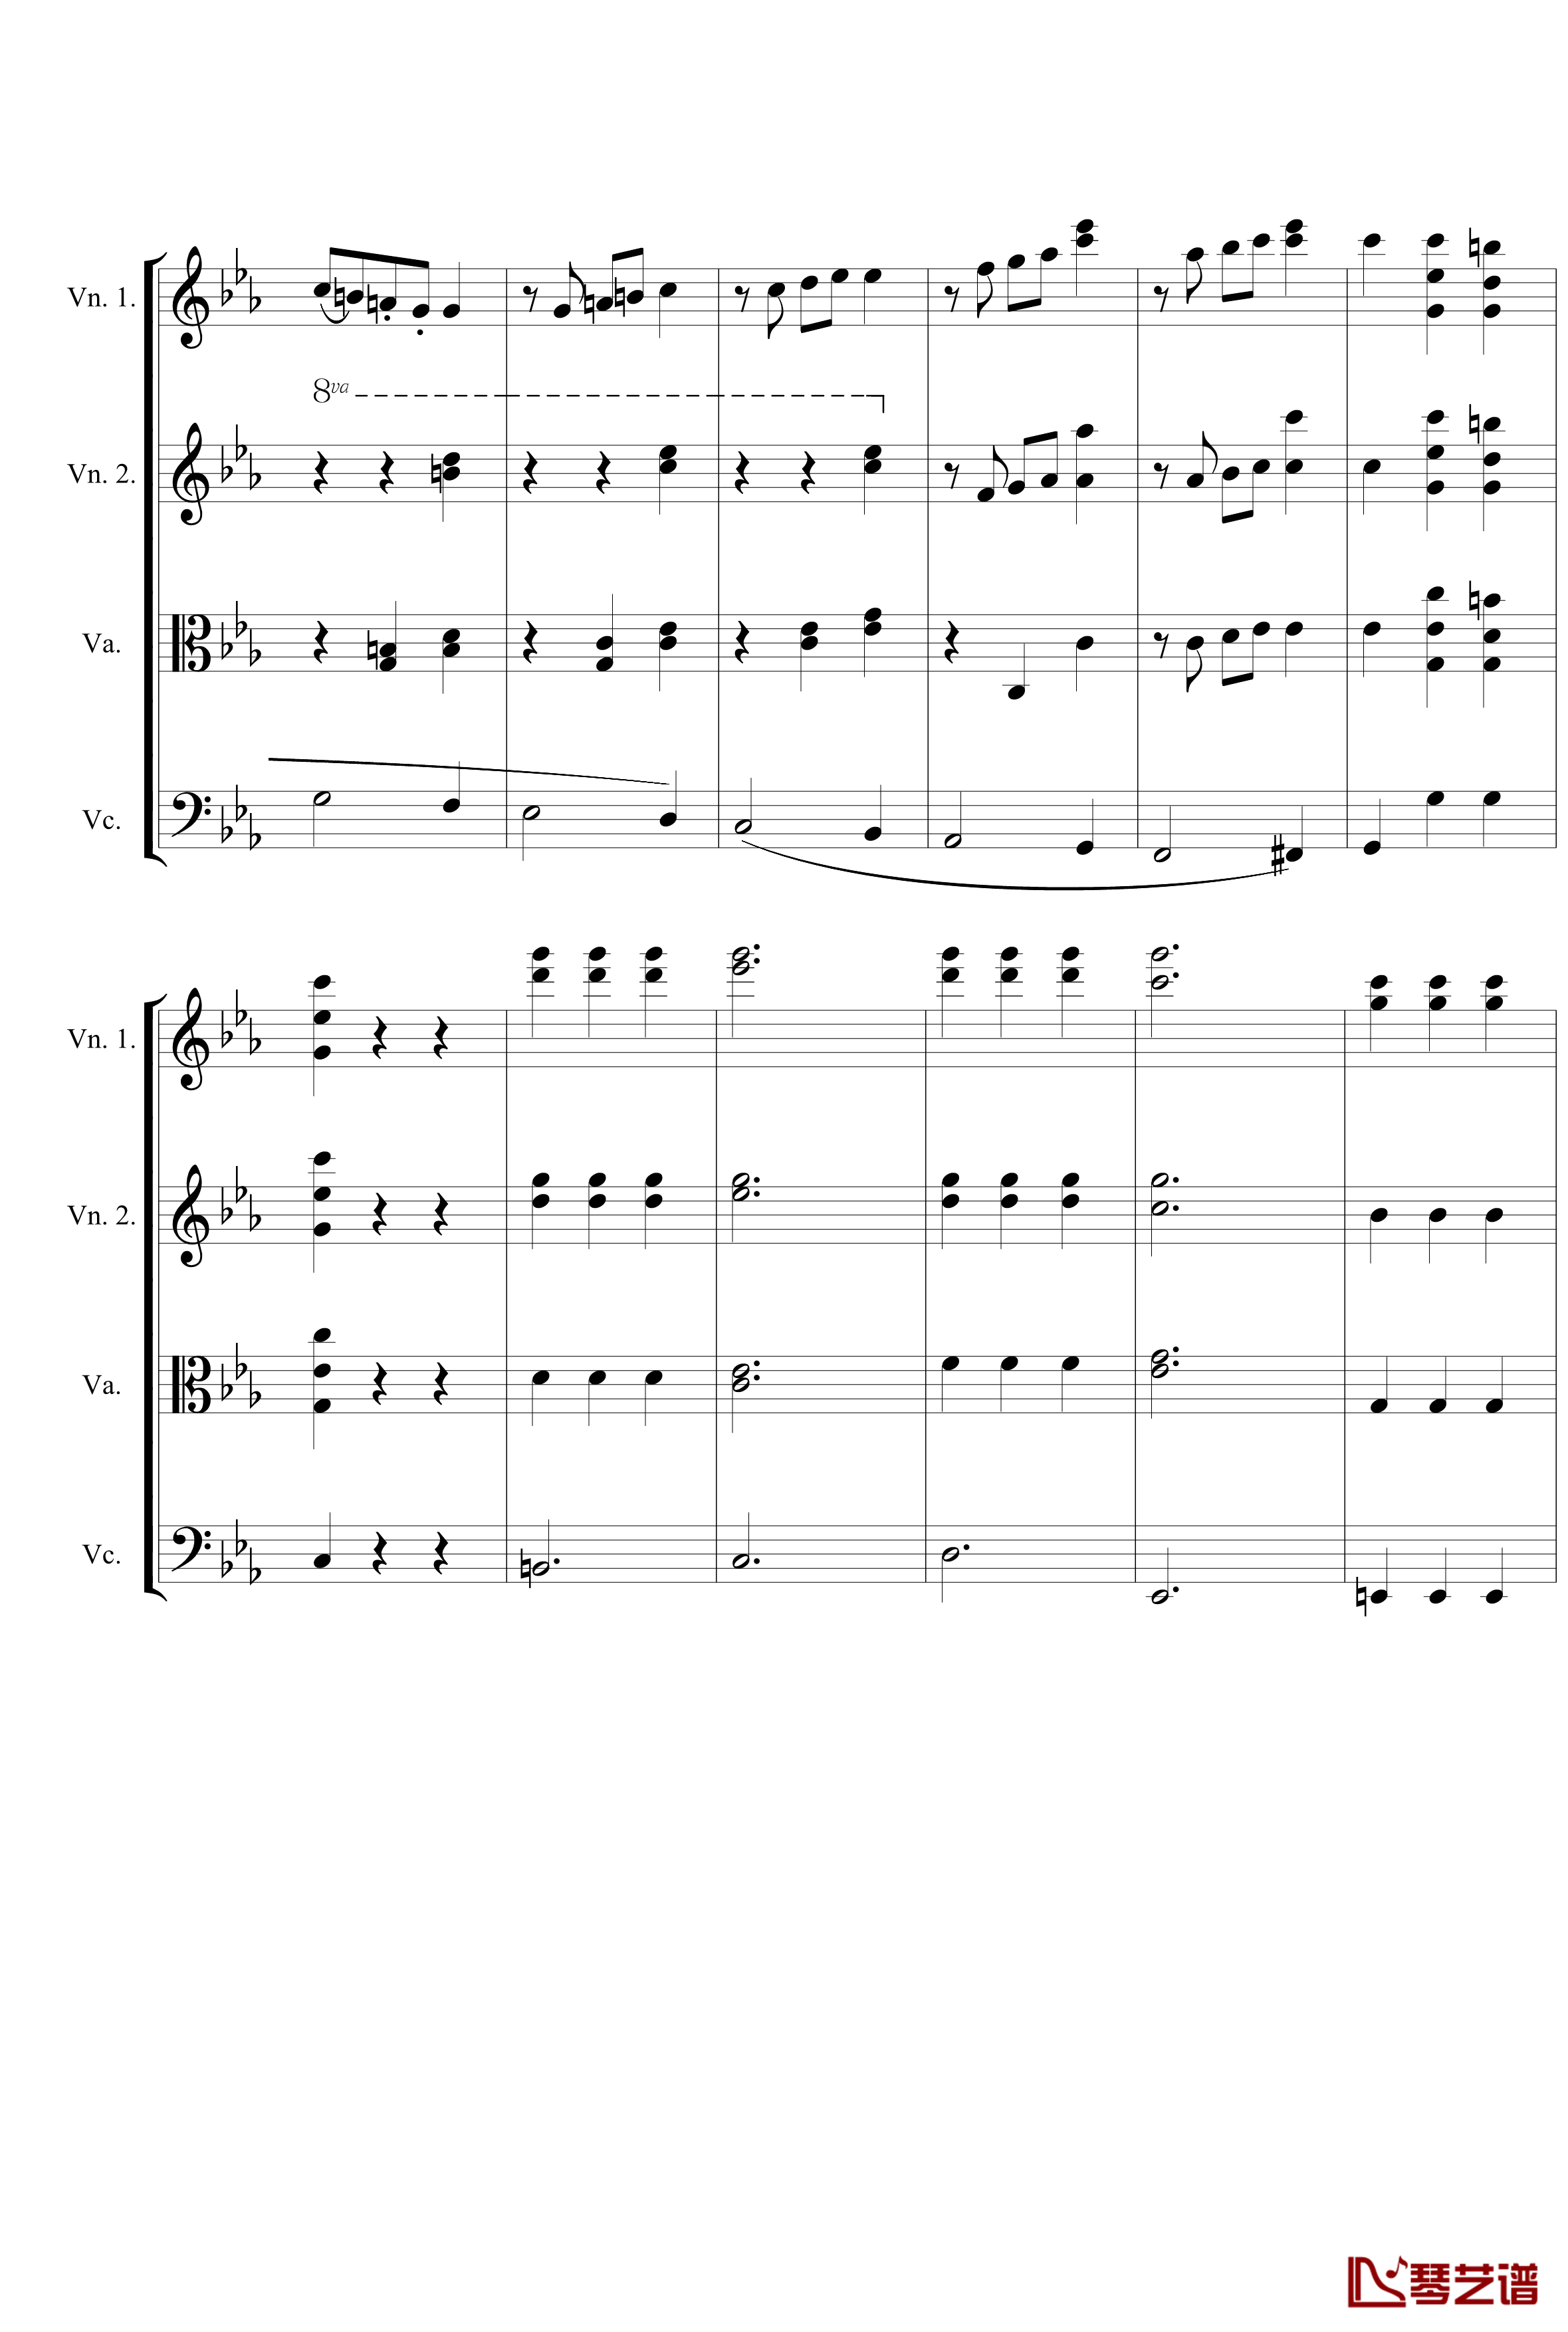 Symphony No.5 in C Minor 3rd钢琴谱-String quartet-贝多芬-beethoven10